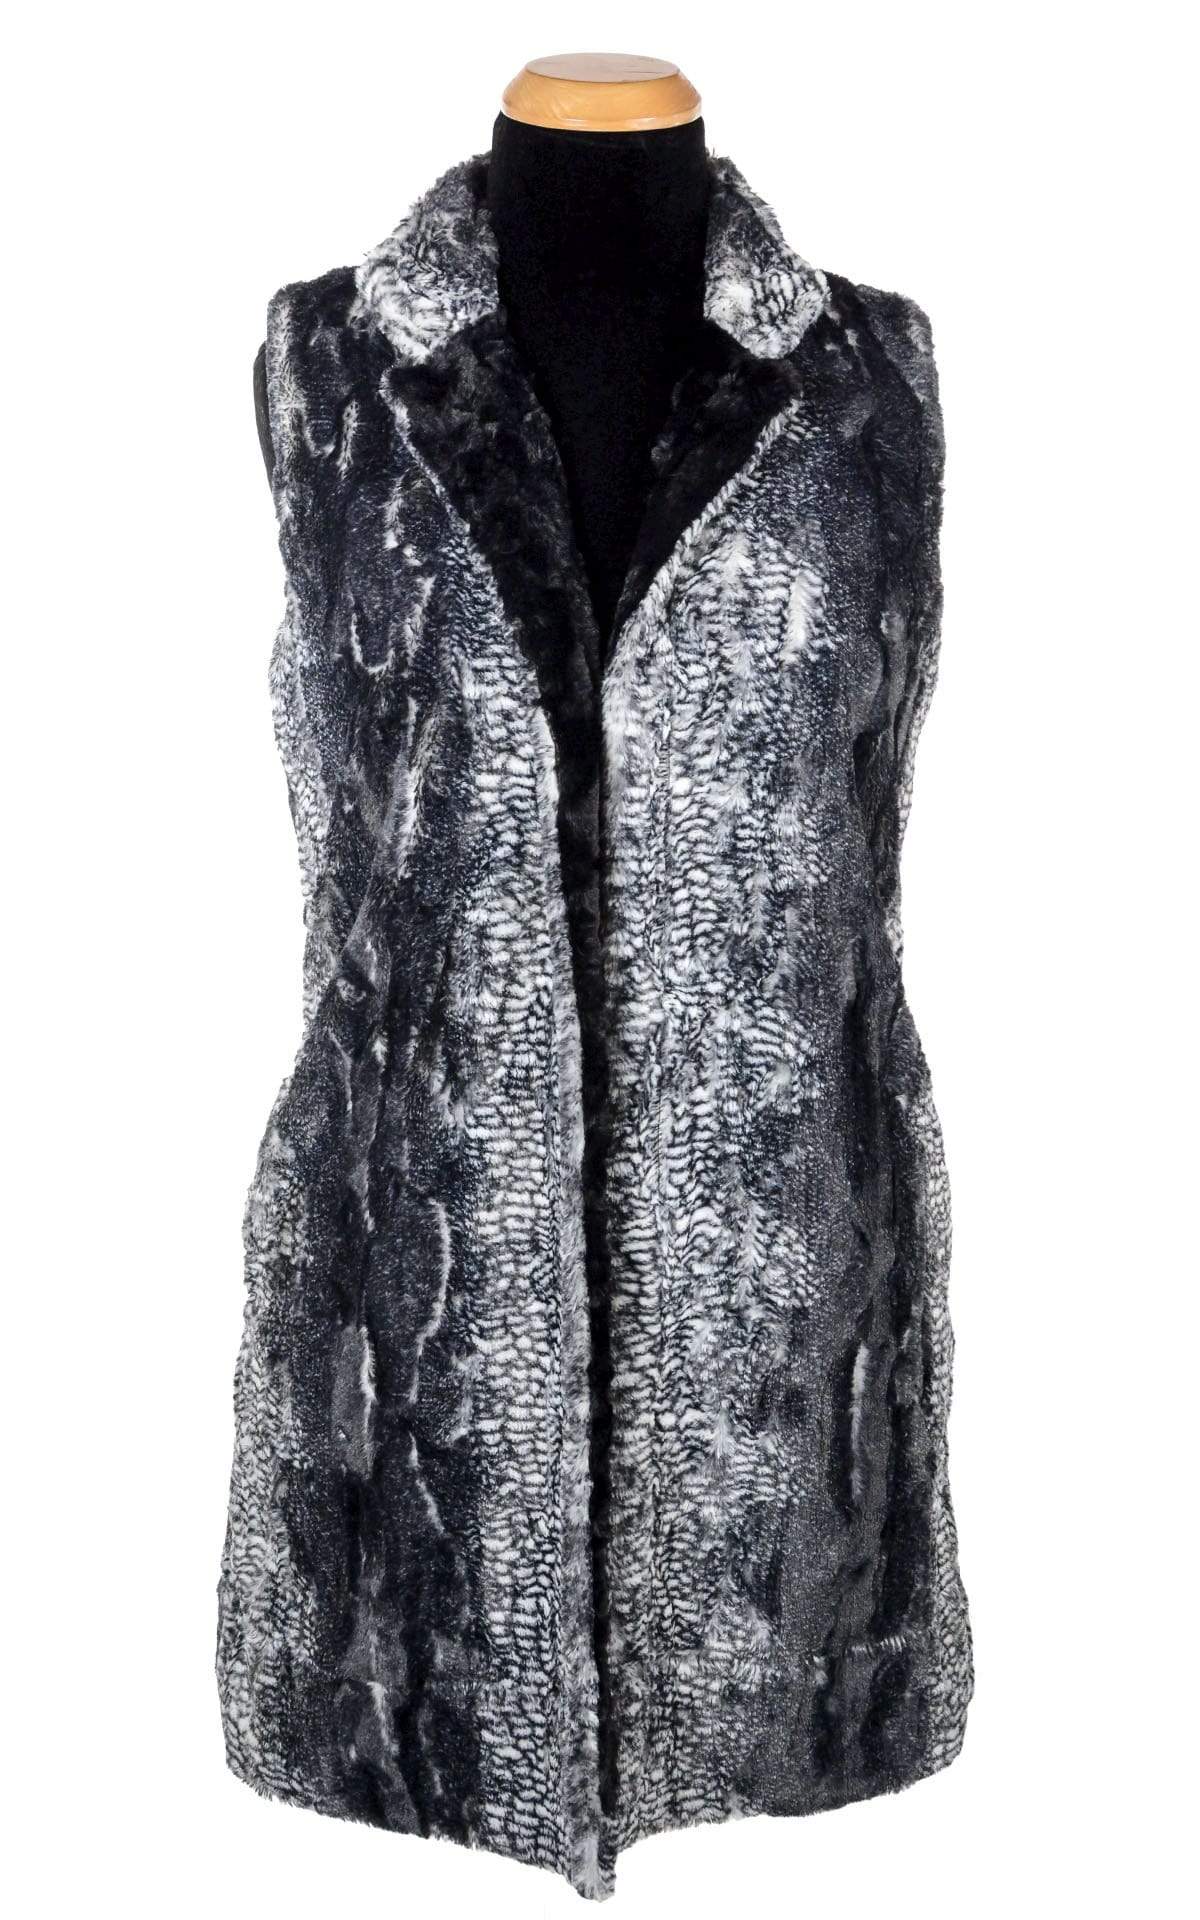 Mandarin Vest | Luxury Faux Fur in Black Mamba lined Cuddly Black | Handmade by Pandemonium Seattle USA